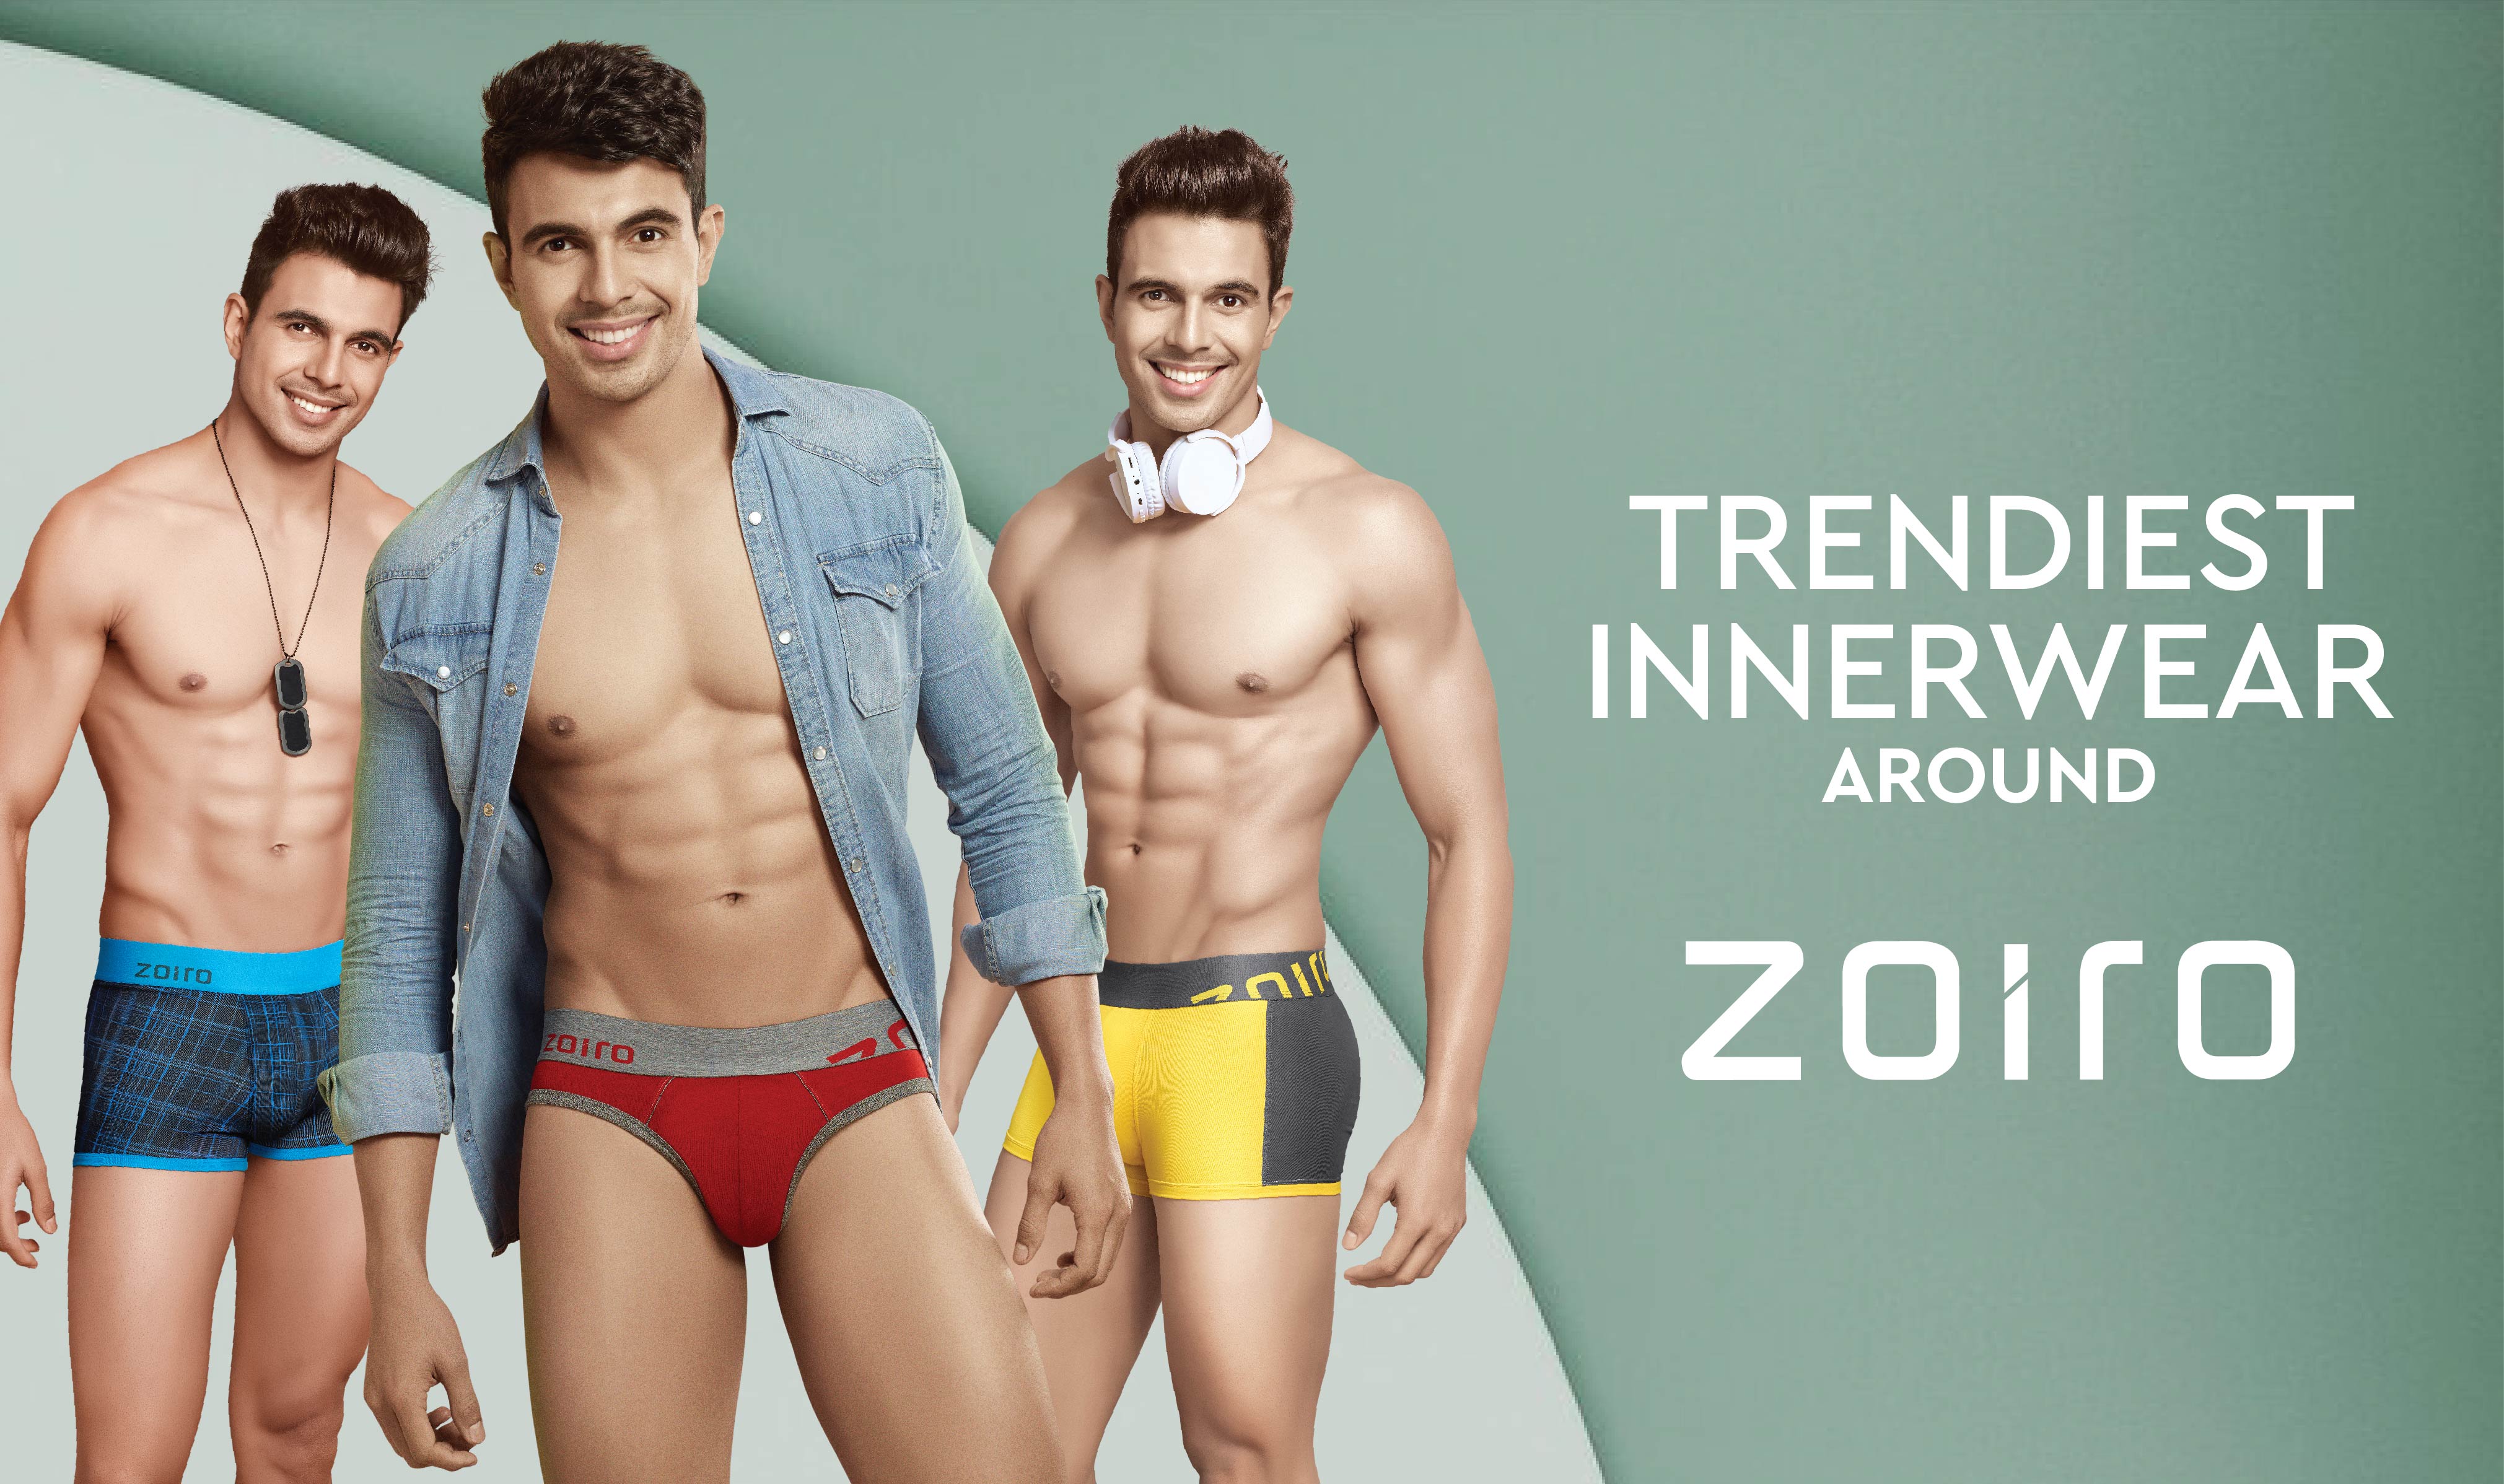 Zoiro - Premium Innerwear for Men. Made in India, Designed in Italy.